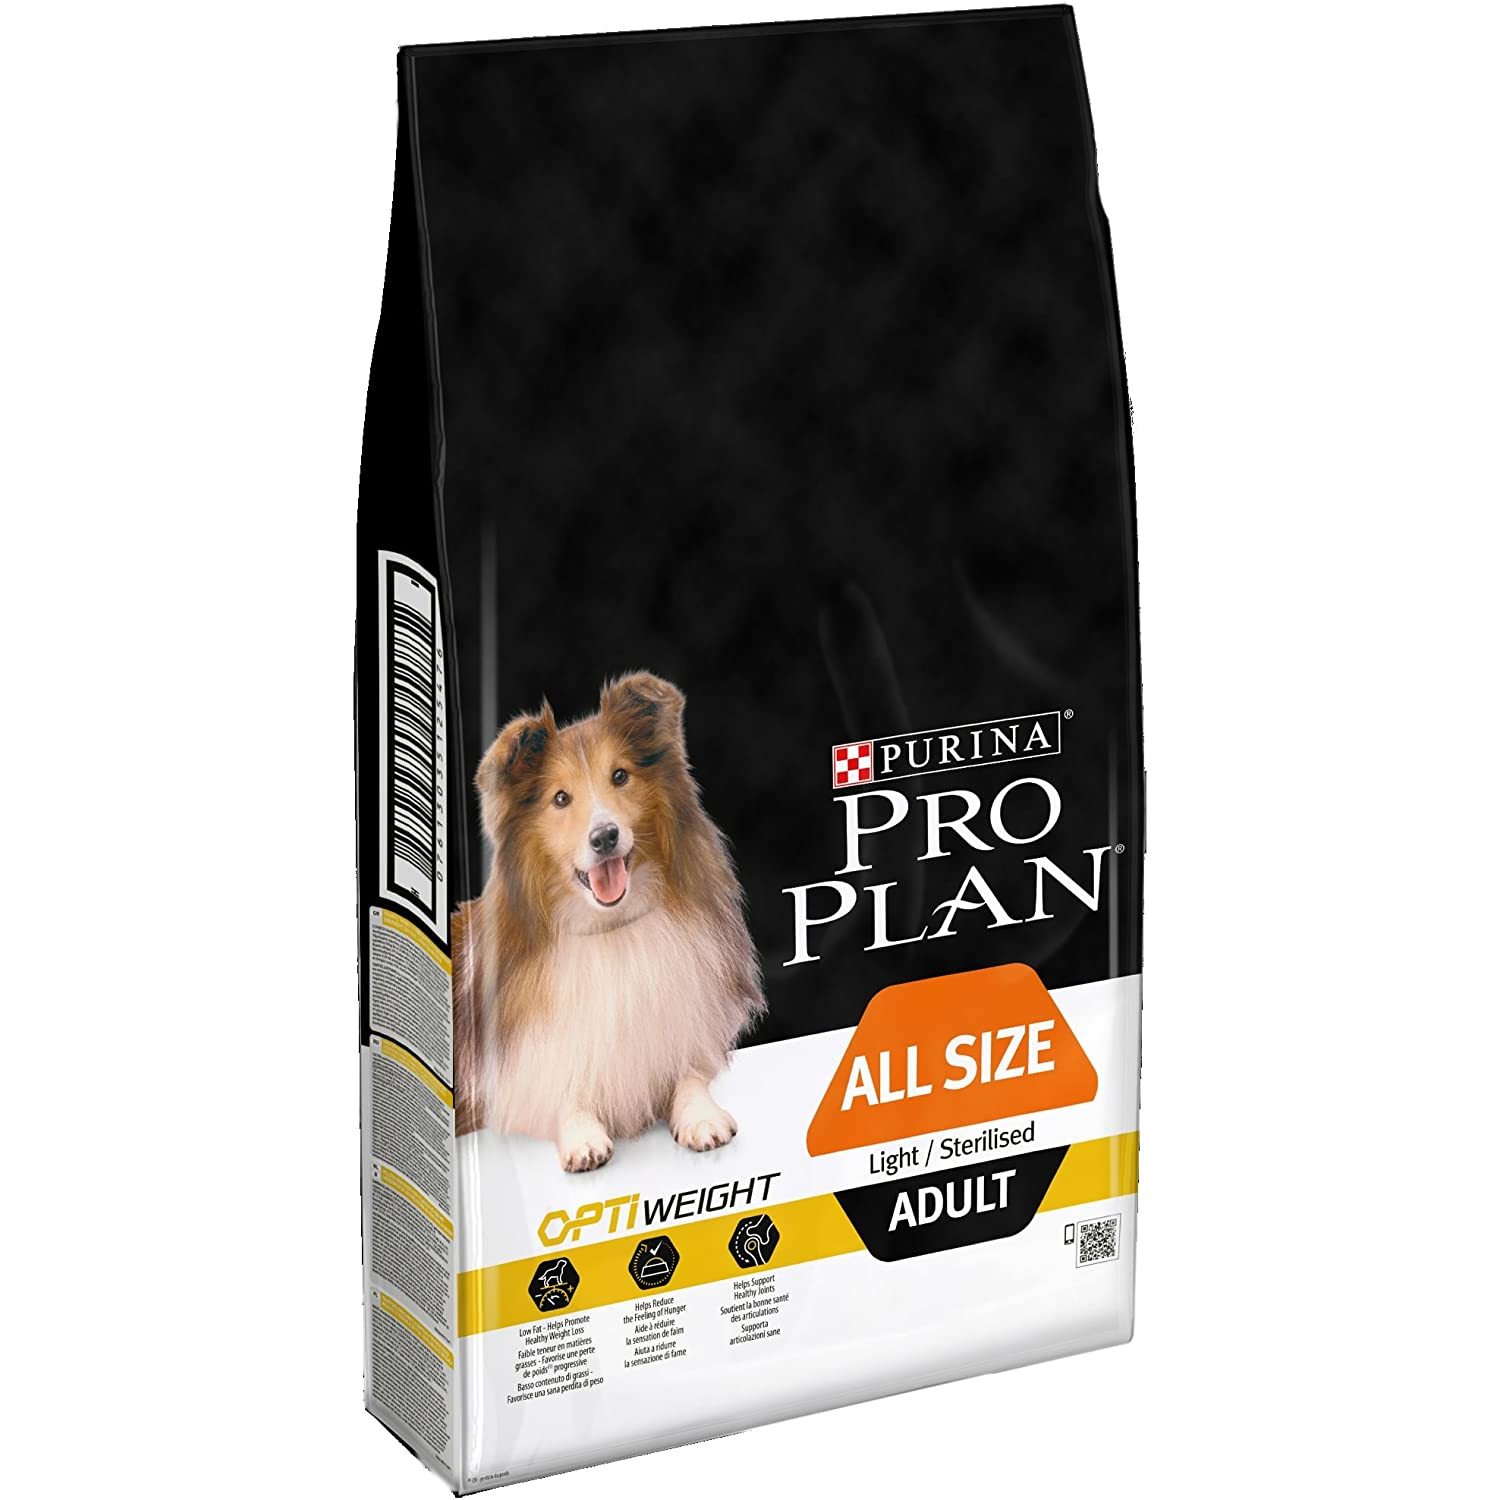 Купить корм для собаки 14 кг. Корм для собак Purina Pro Plan OPTIWEIGHT. Purina Pro Plan OPTIWEIGHT для собак. Pro Plan OPTIWEIGHT для собак. Проплан Пурина для собак адульт.